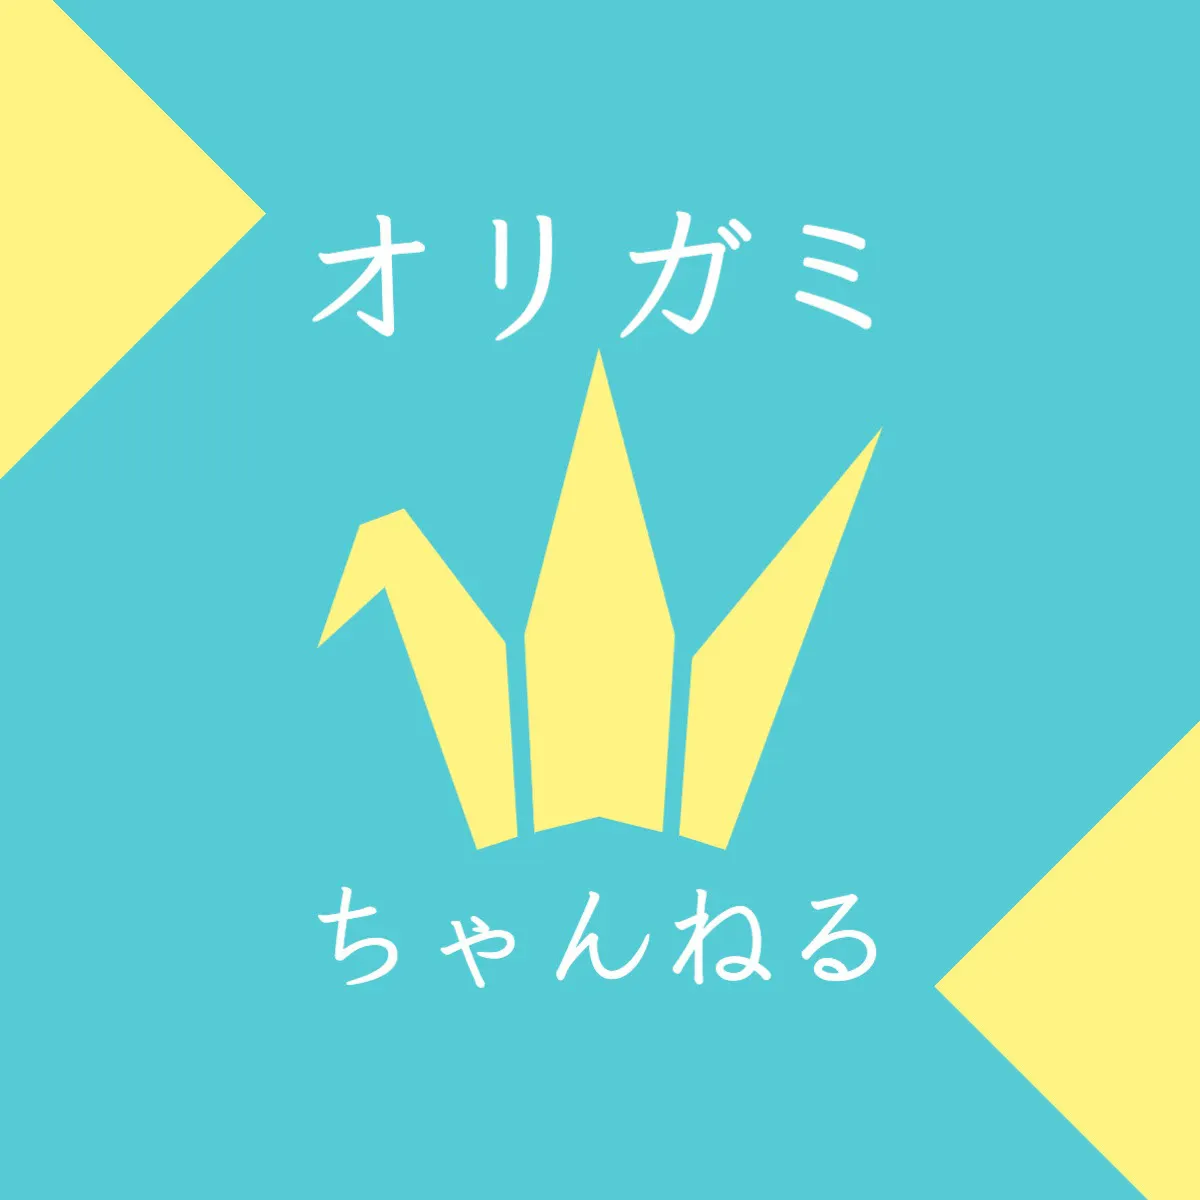 Yellow origami youtube logo